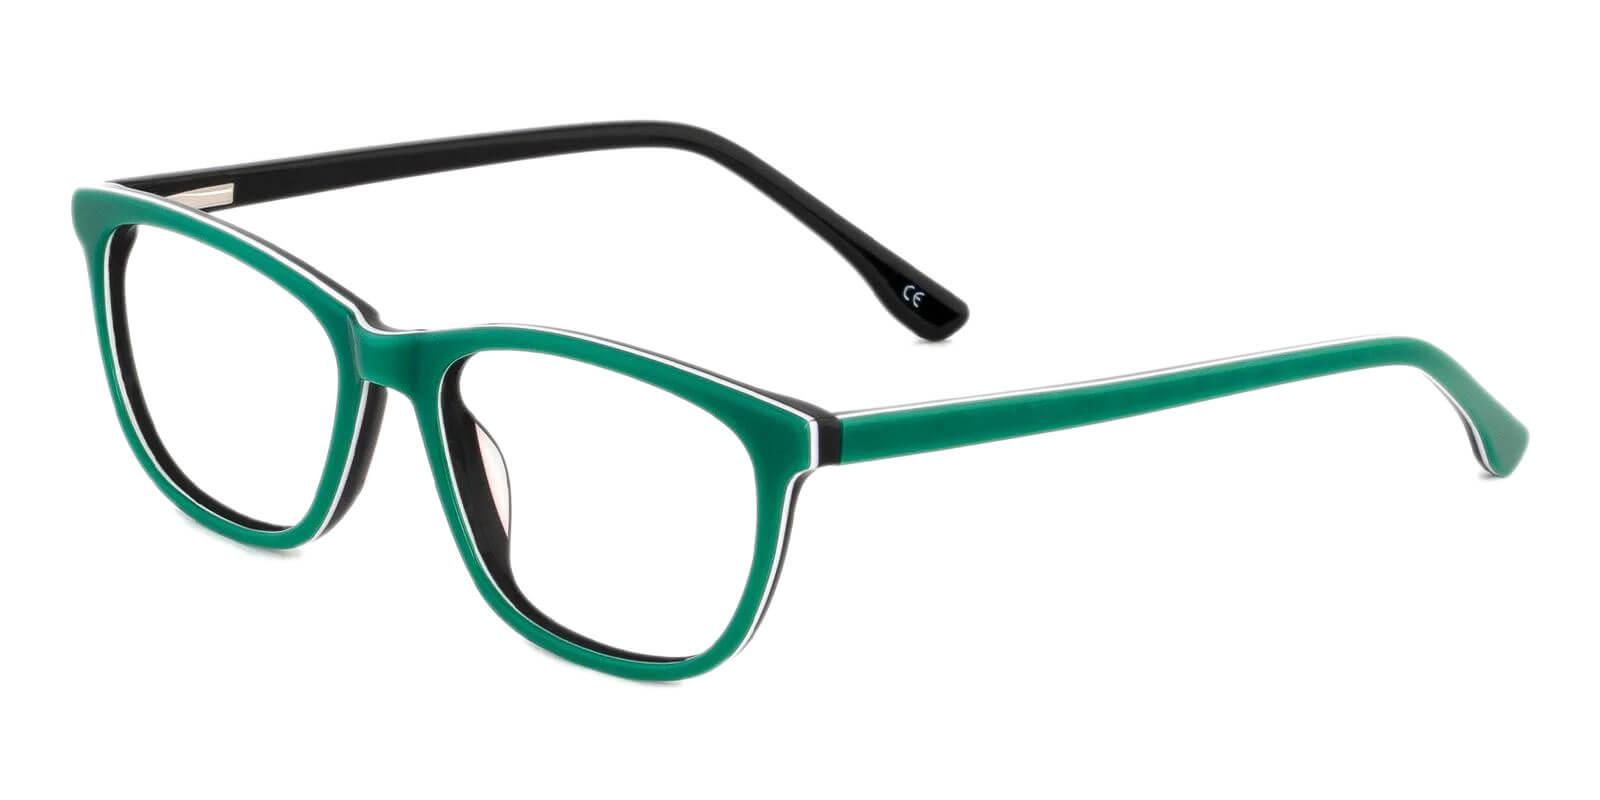 Machovec Green Acetate Eyeglasses , SpringHinges , UniversalBridgeFit Frames from ABBE Glasses